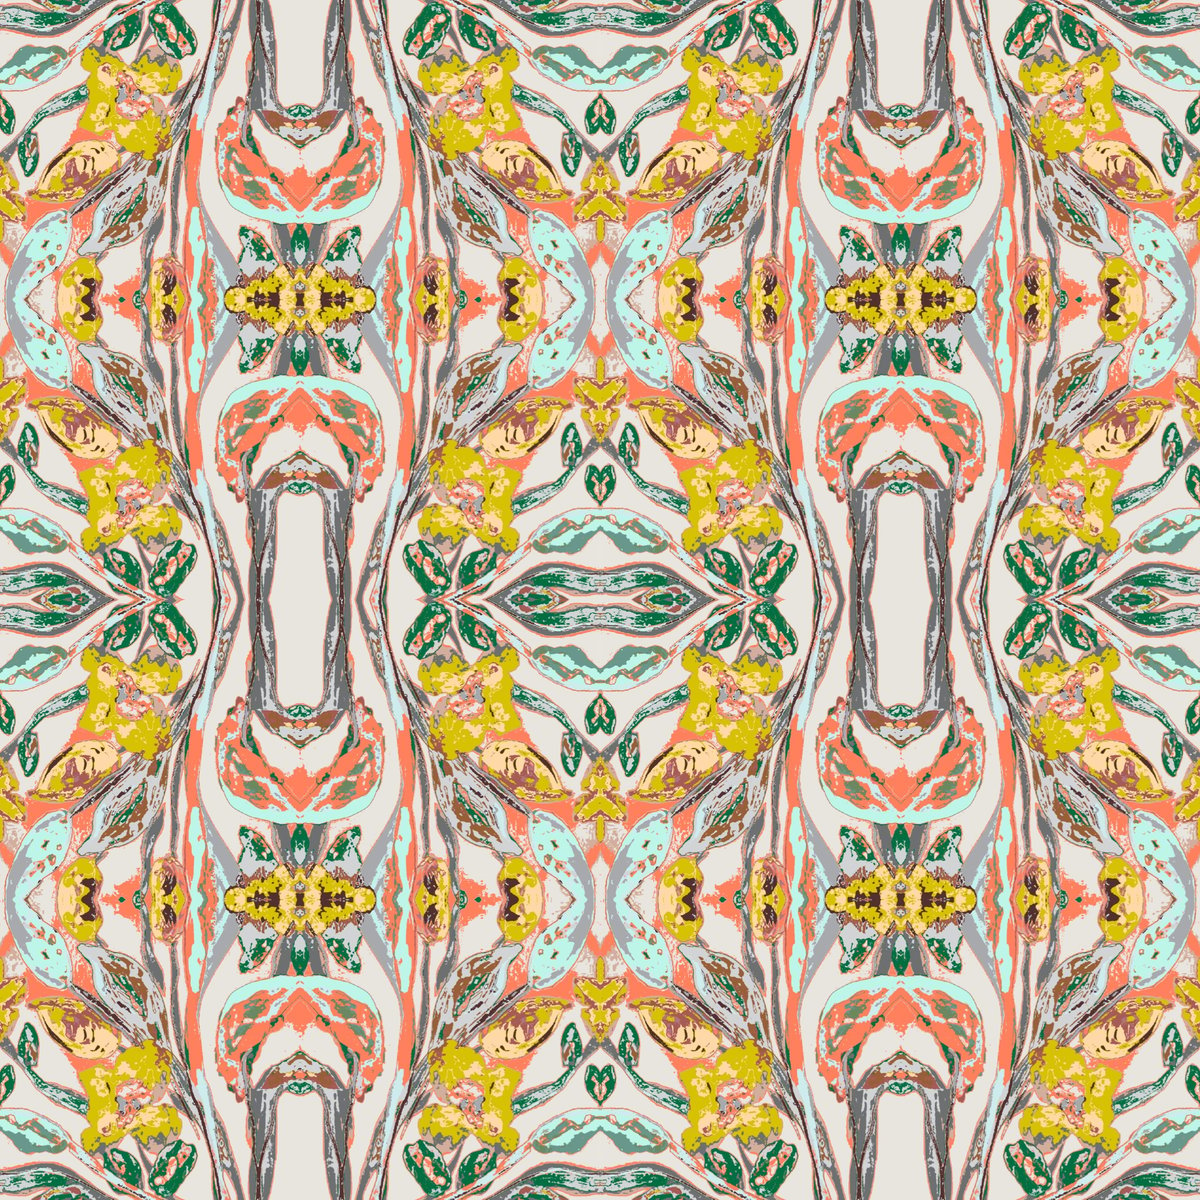 Image of 3000-1J Wallpaper/Fabric